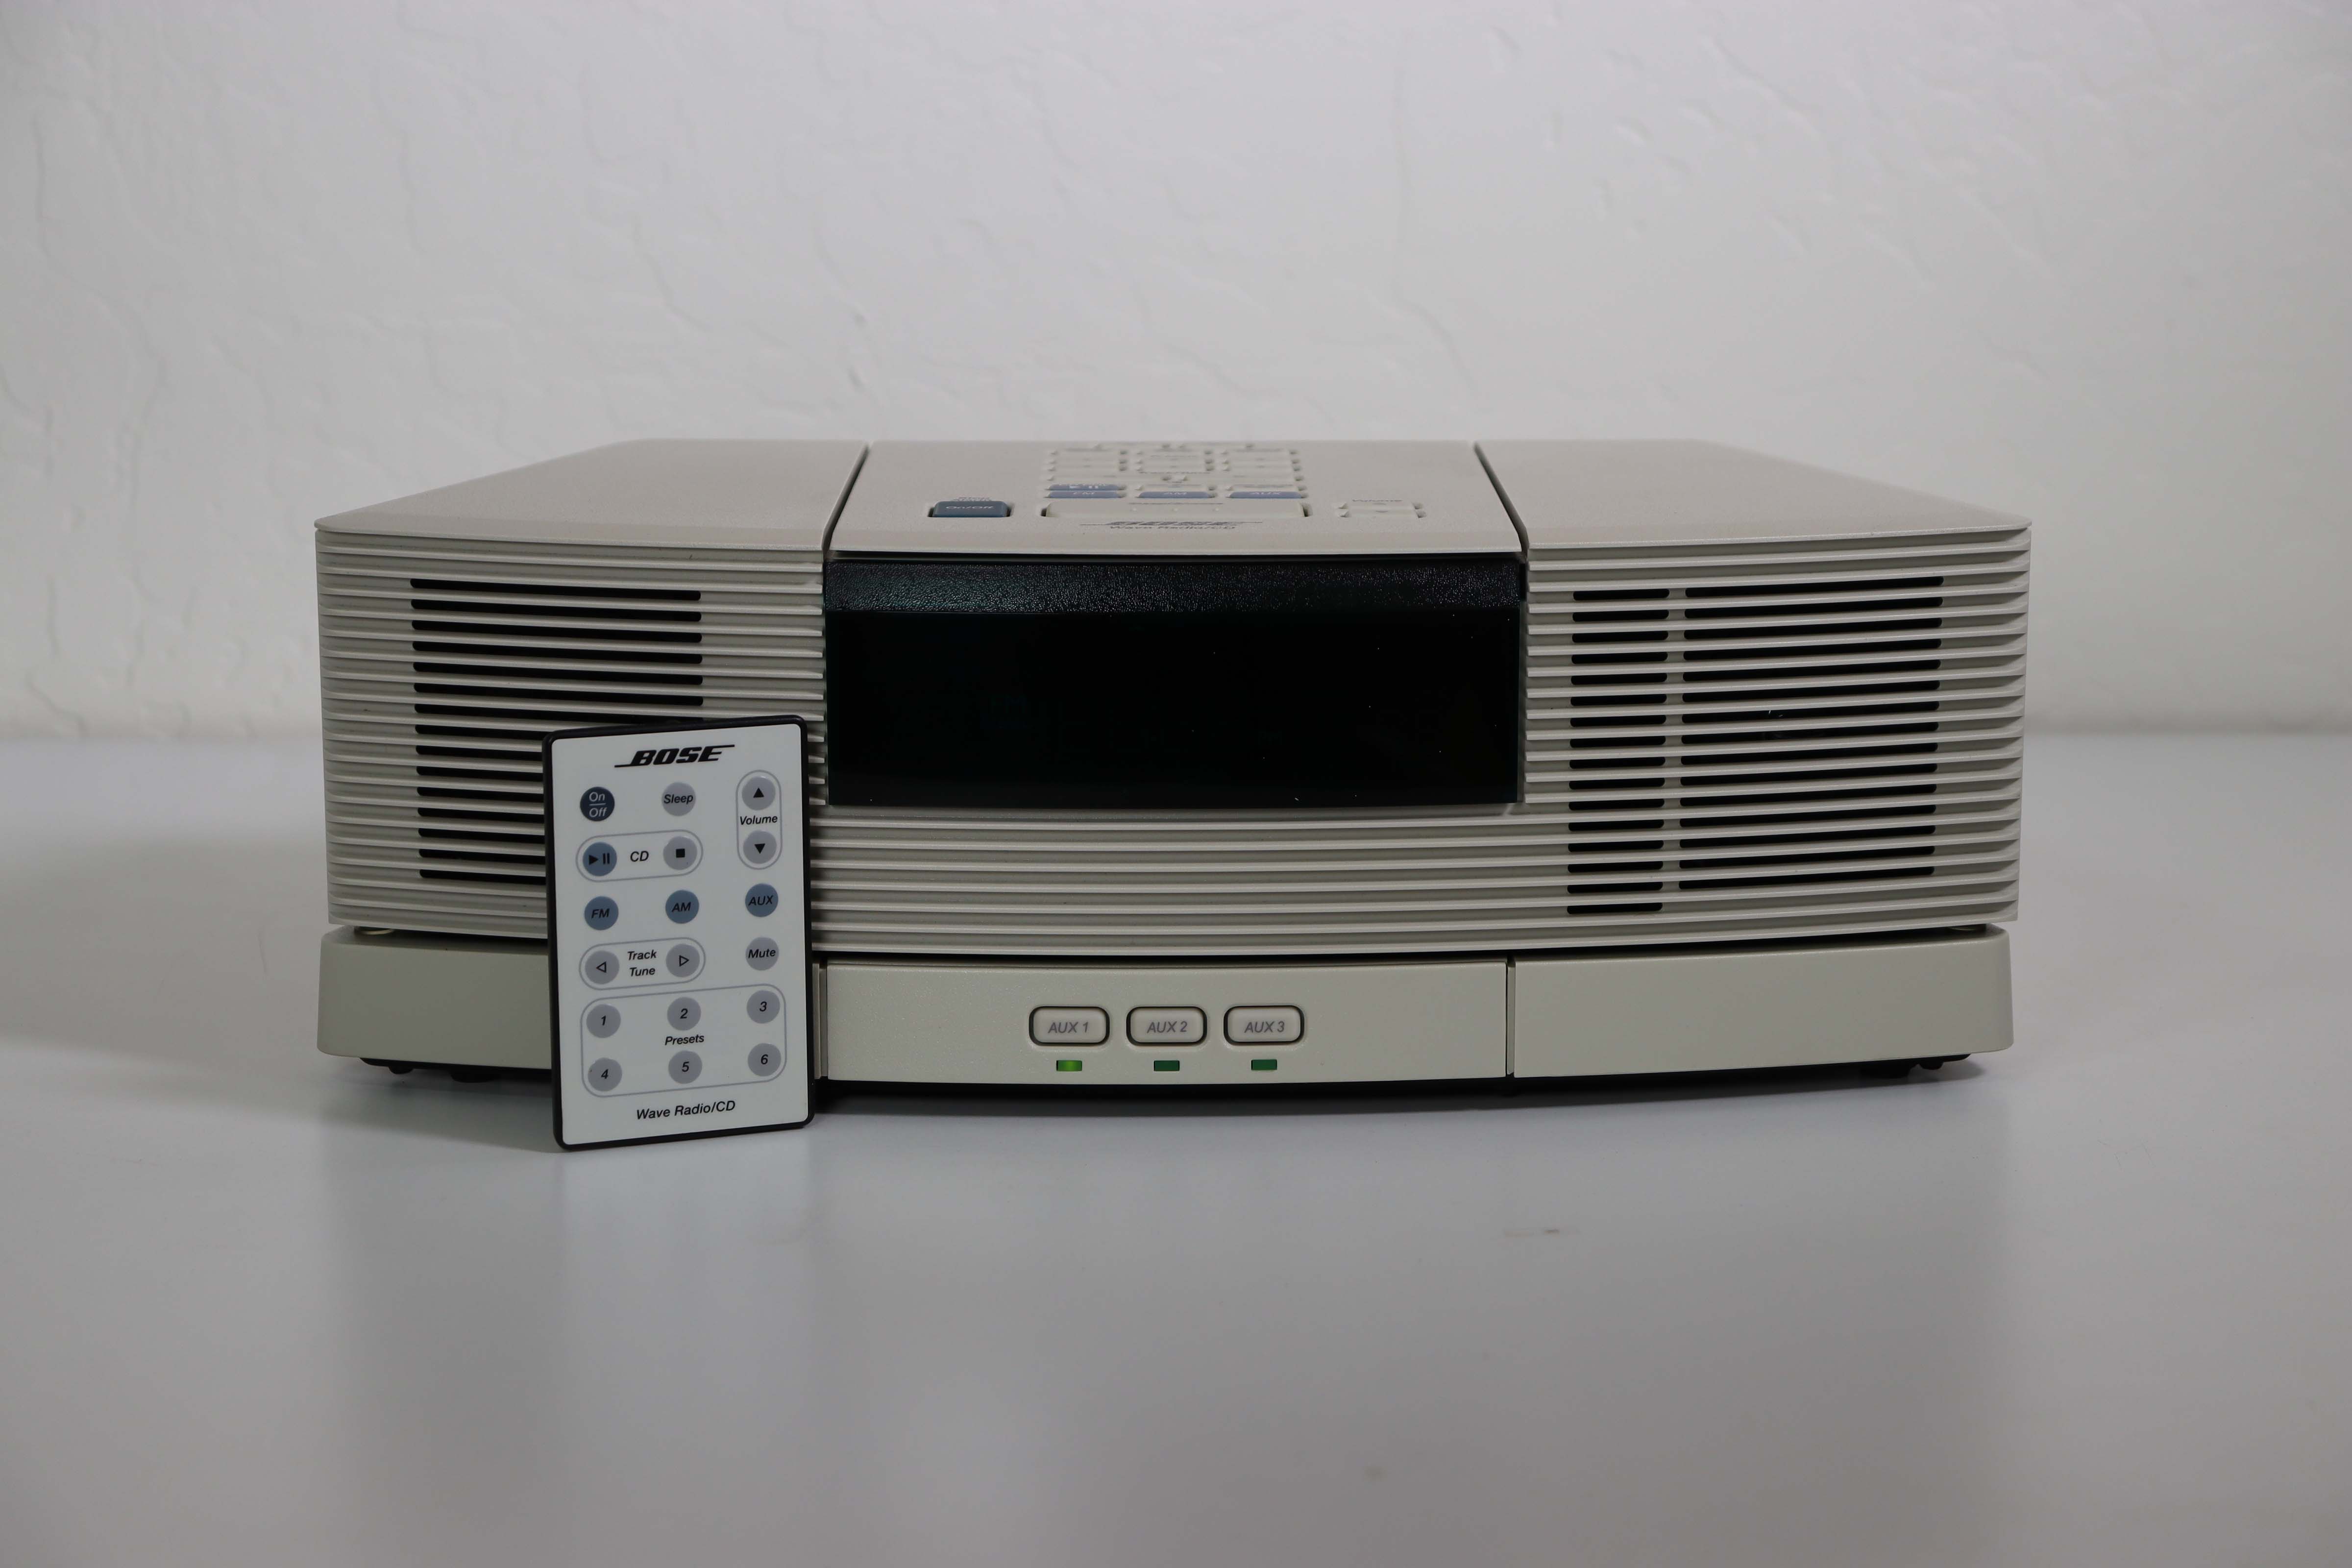 Bose Equipment Cd Players Dvd Speakers Radios More